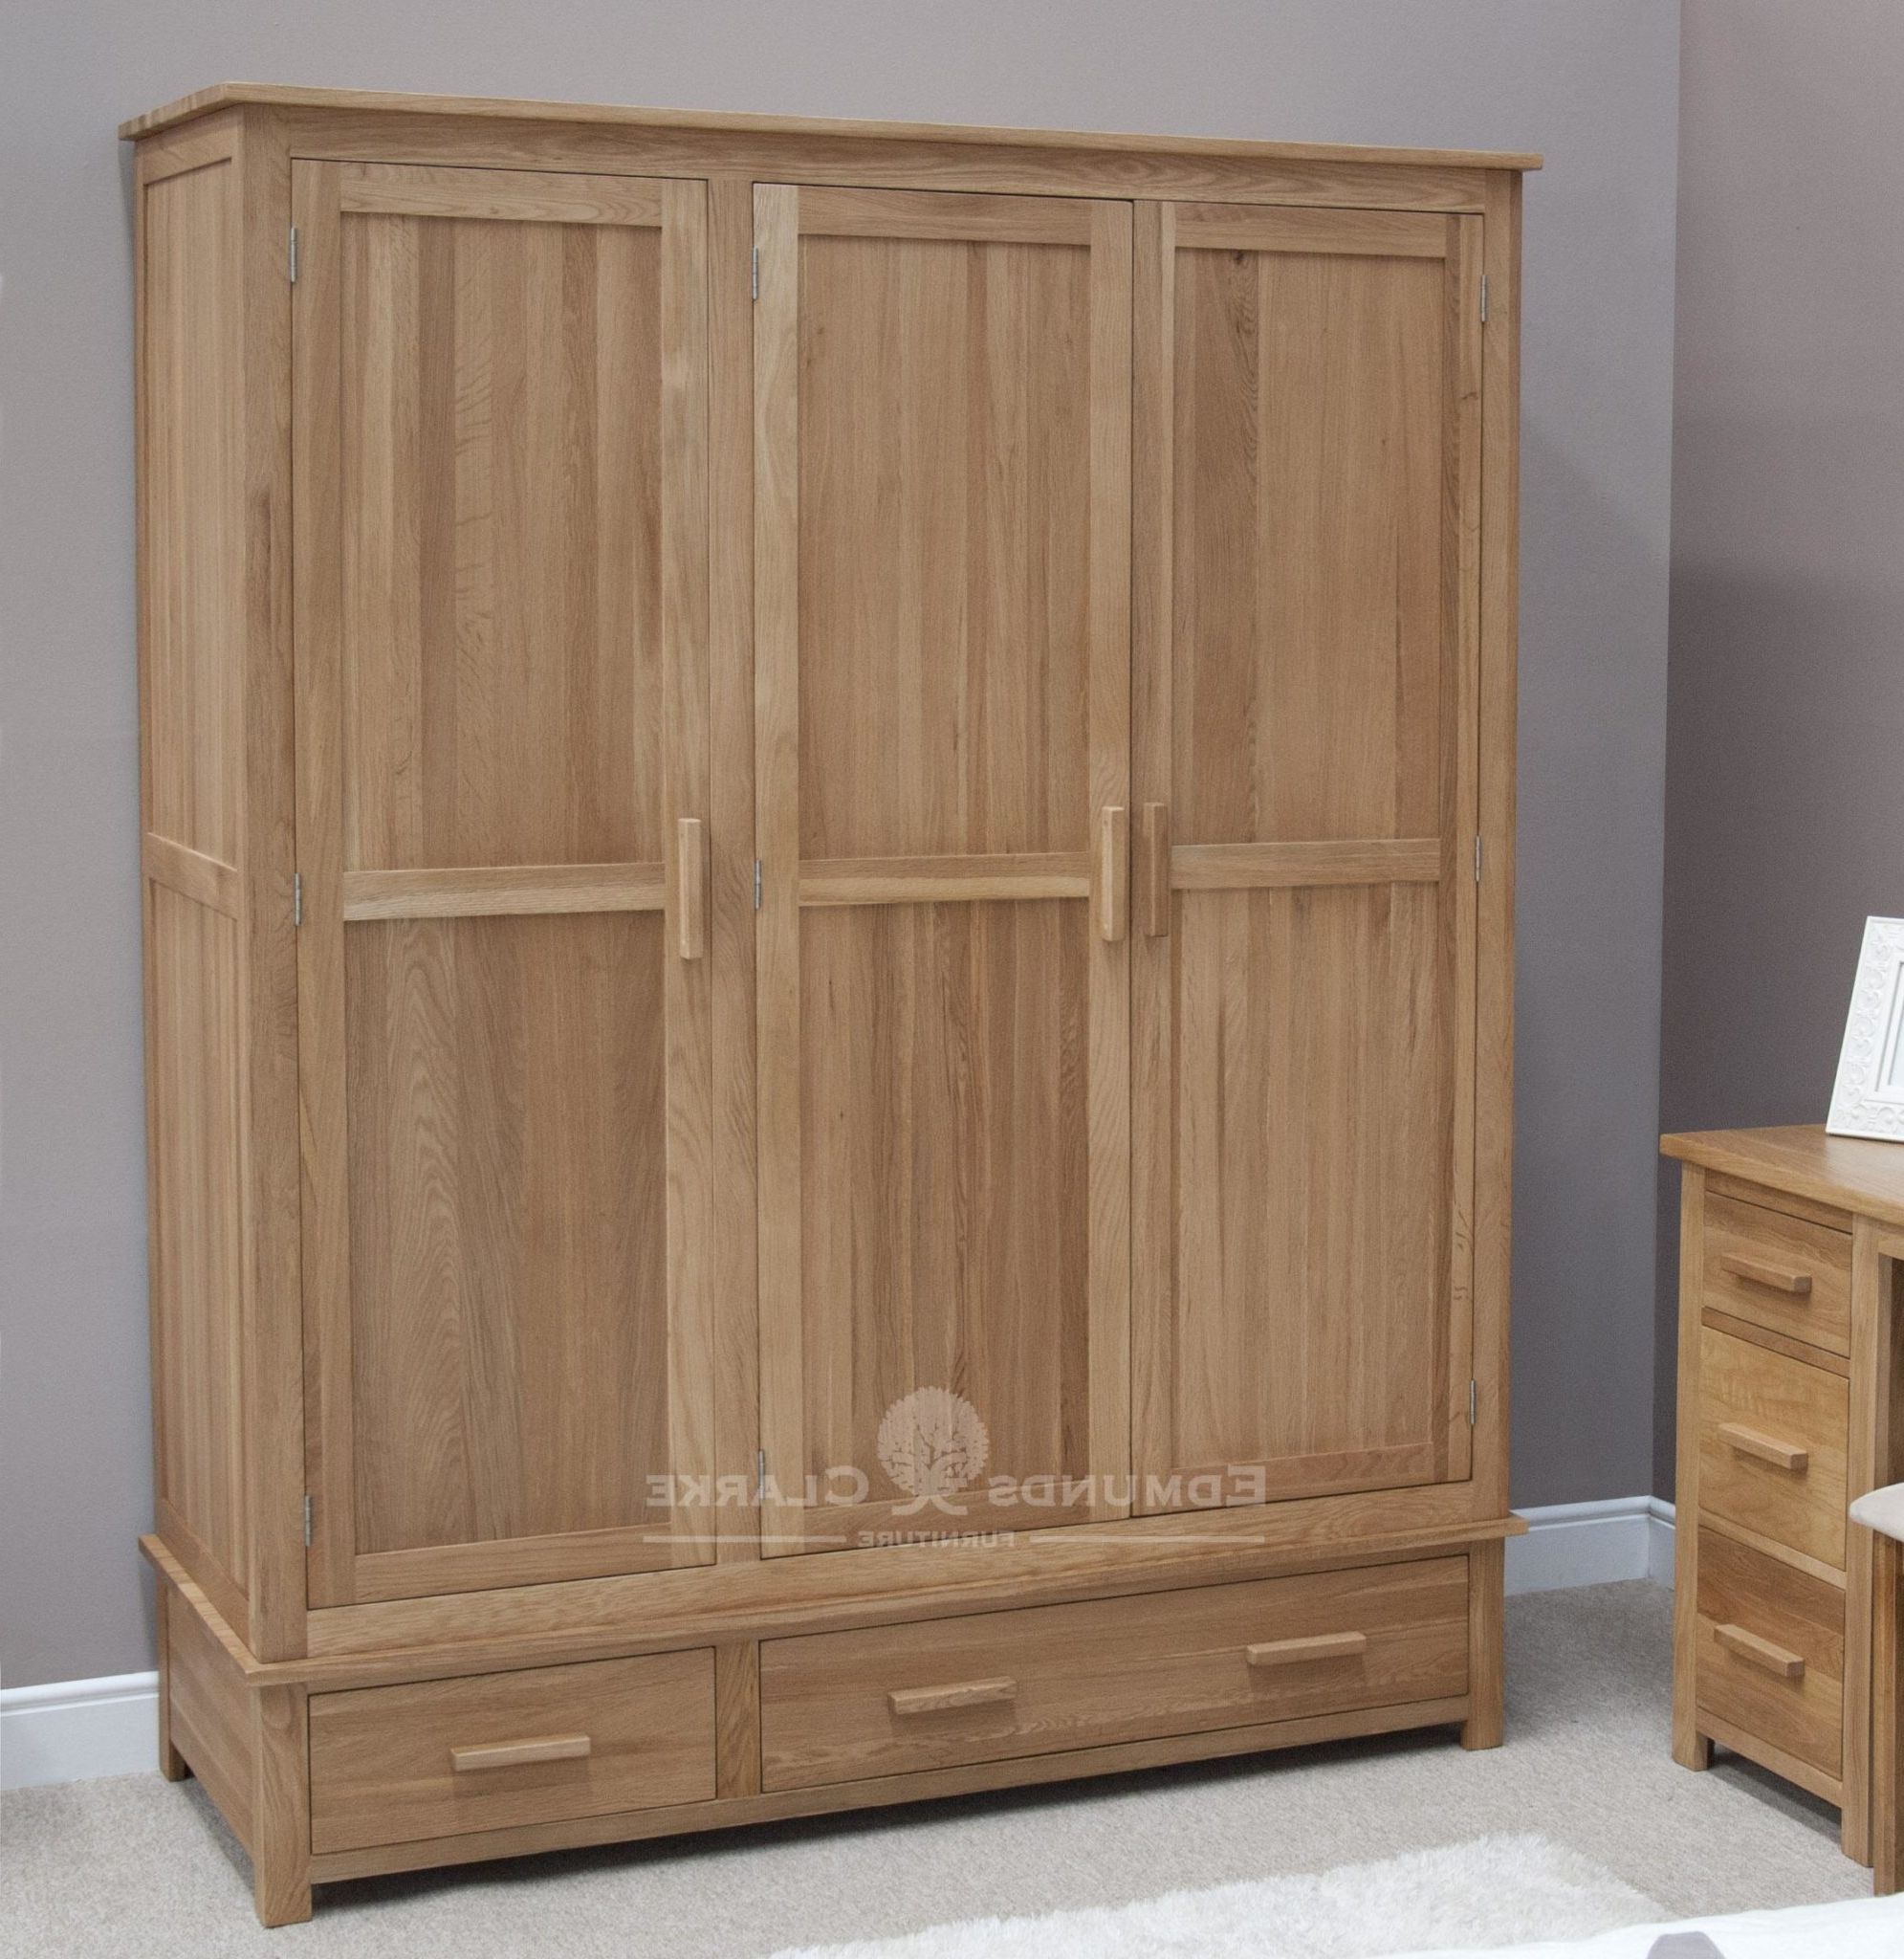 Bury Solid Oak 3 Door Wardrobe With Drawers | Edmunds & Clarke Ltd With Regard To Triple Oak Wardrobes (View 9 of 20)